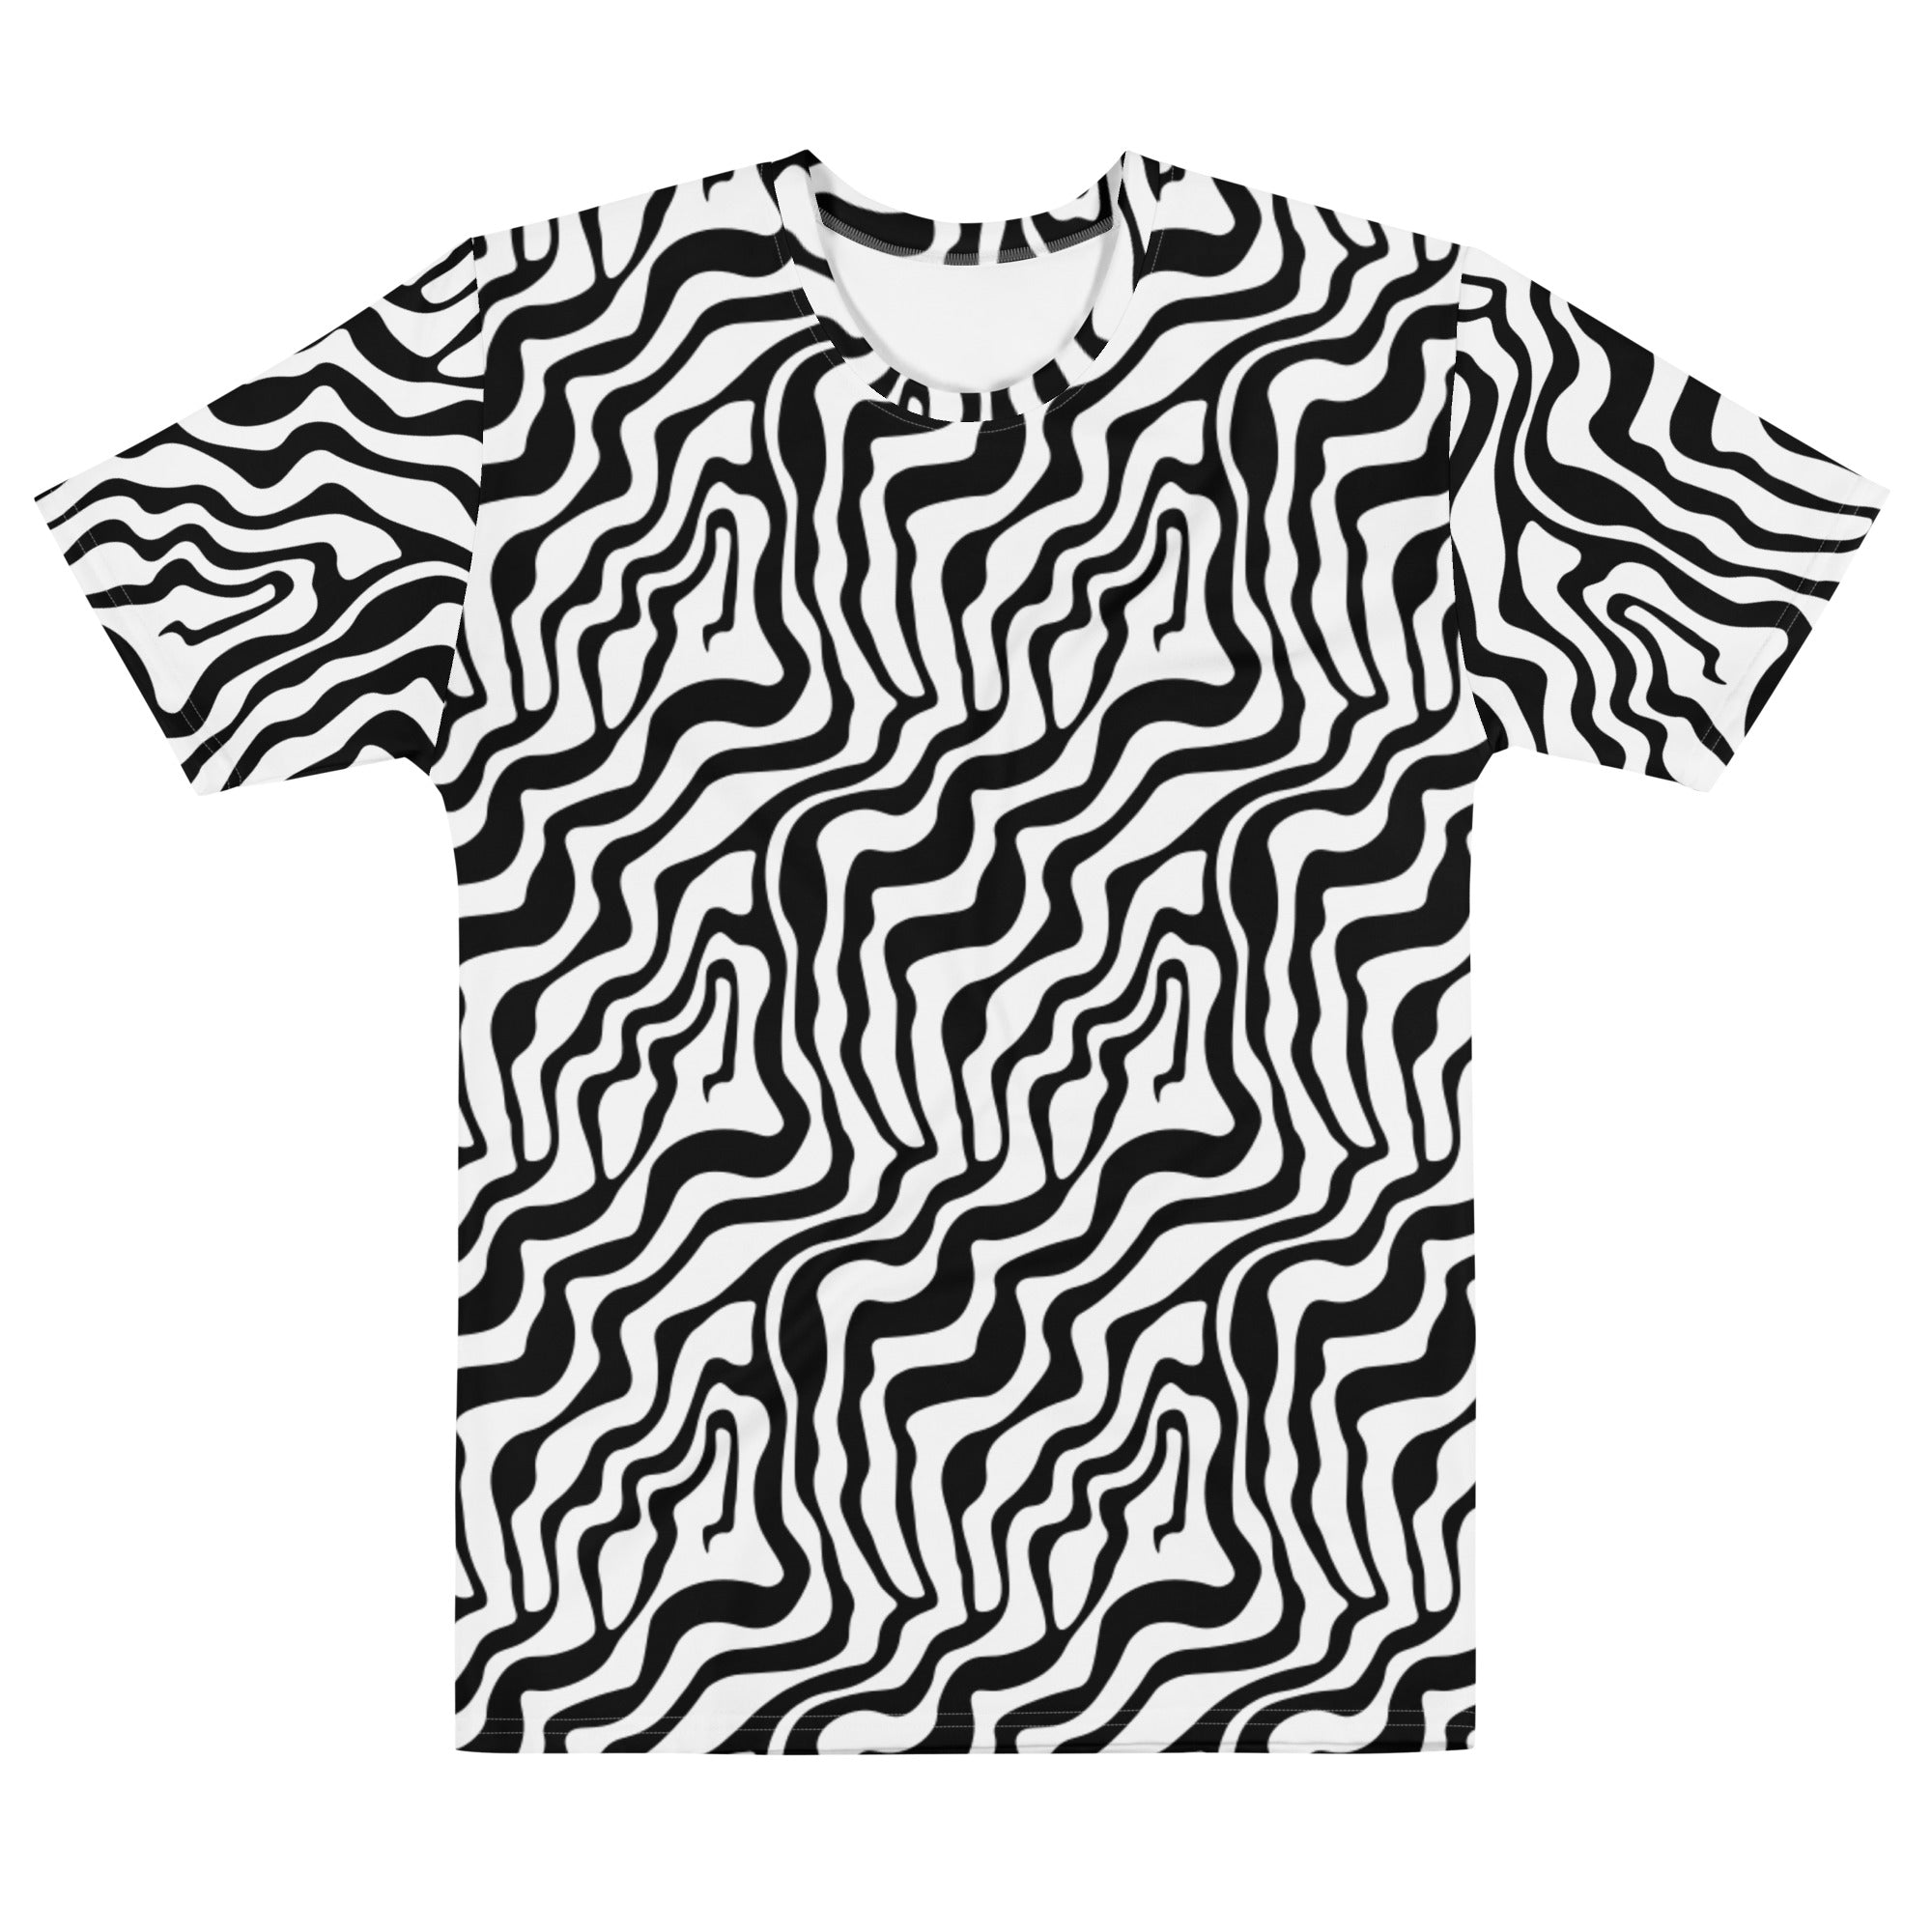 Zebra Shirt